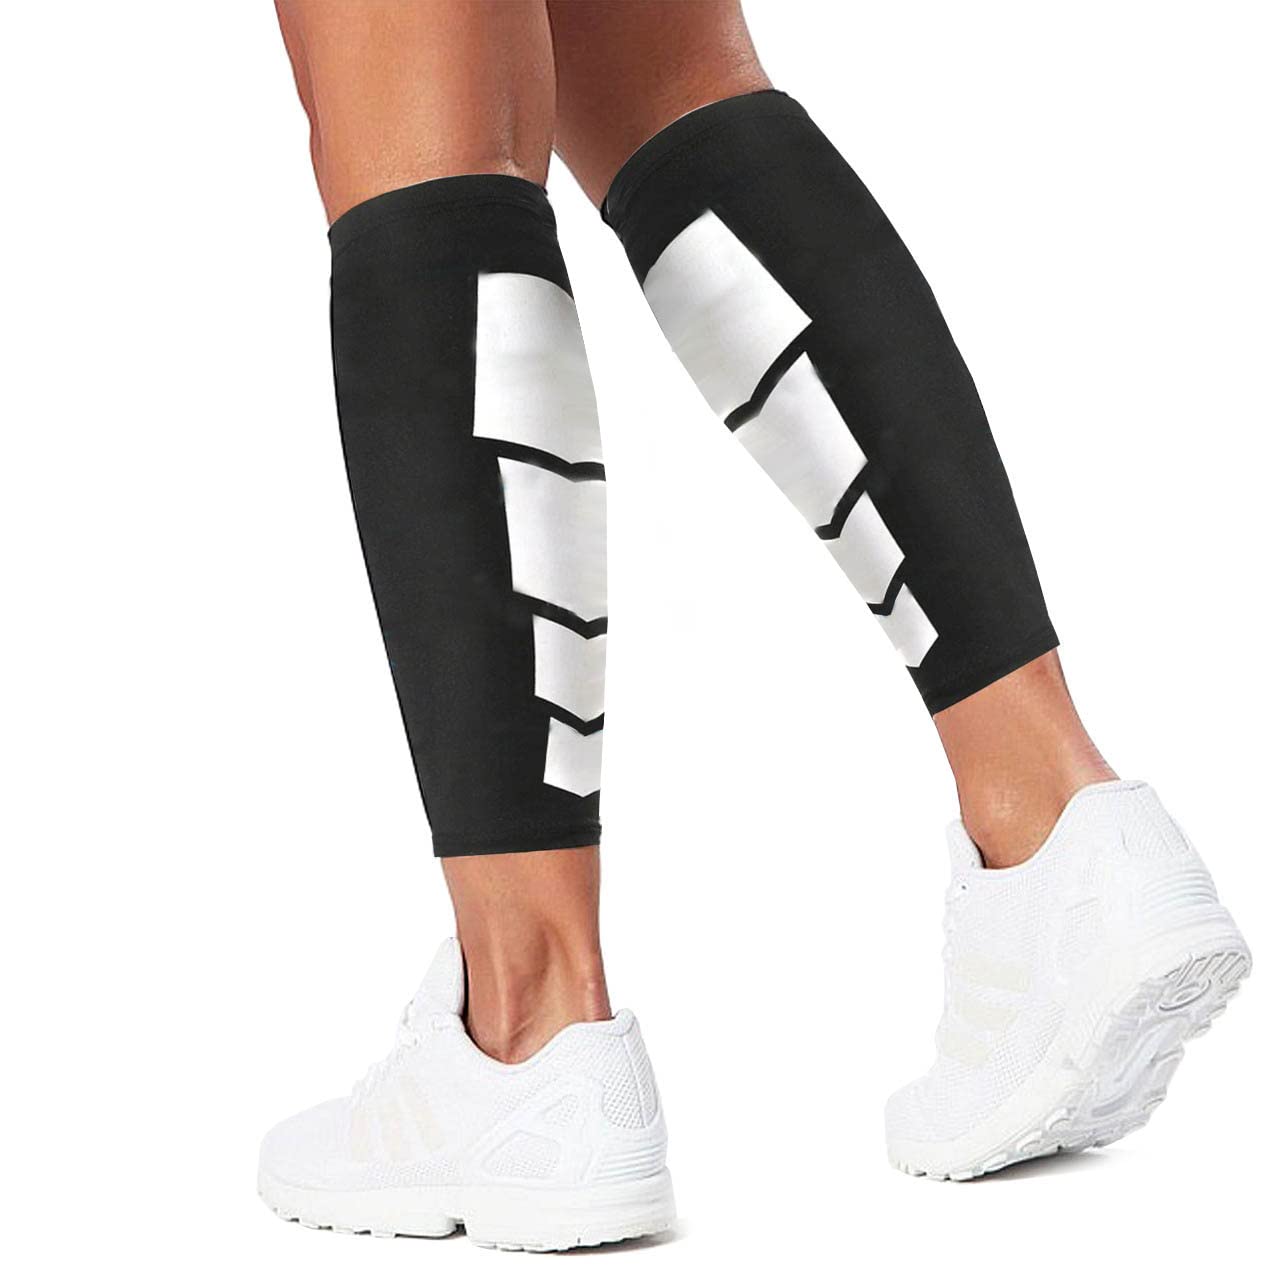 1 Pair Cycling Leg Warmers Basketball Calf Compression Sleeves